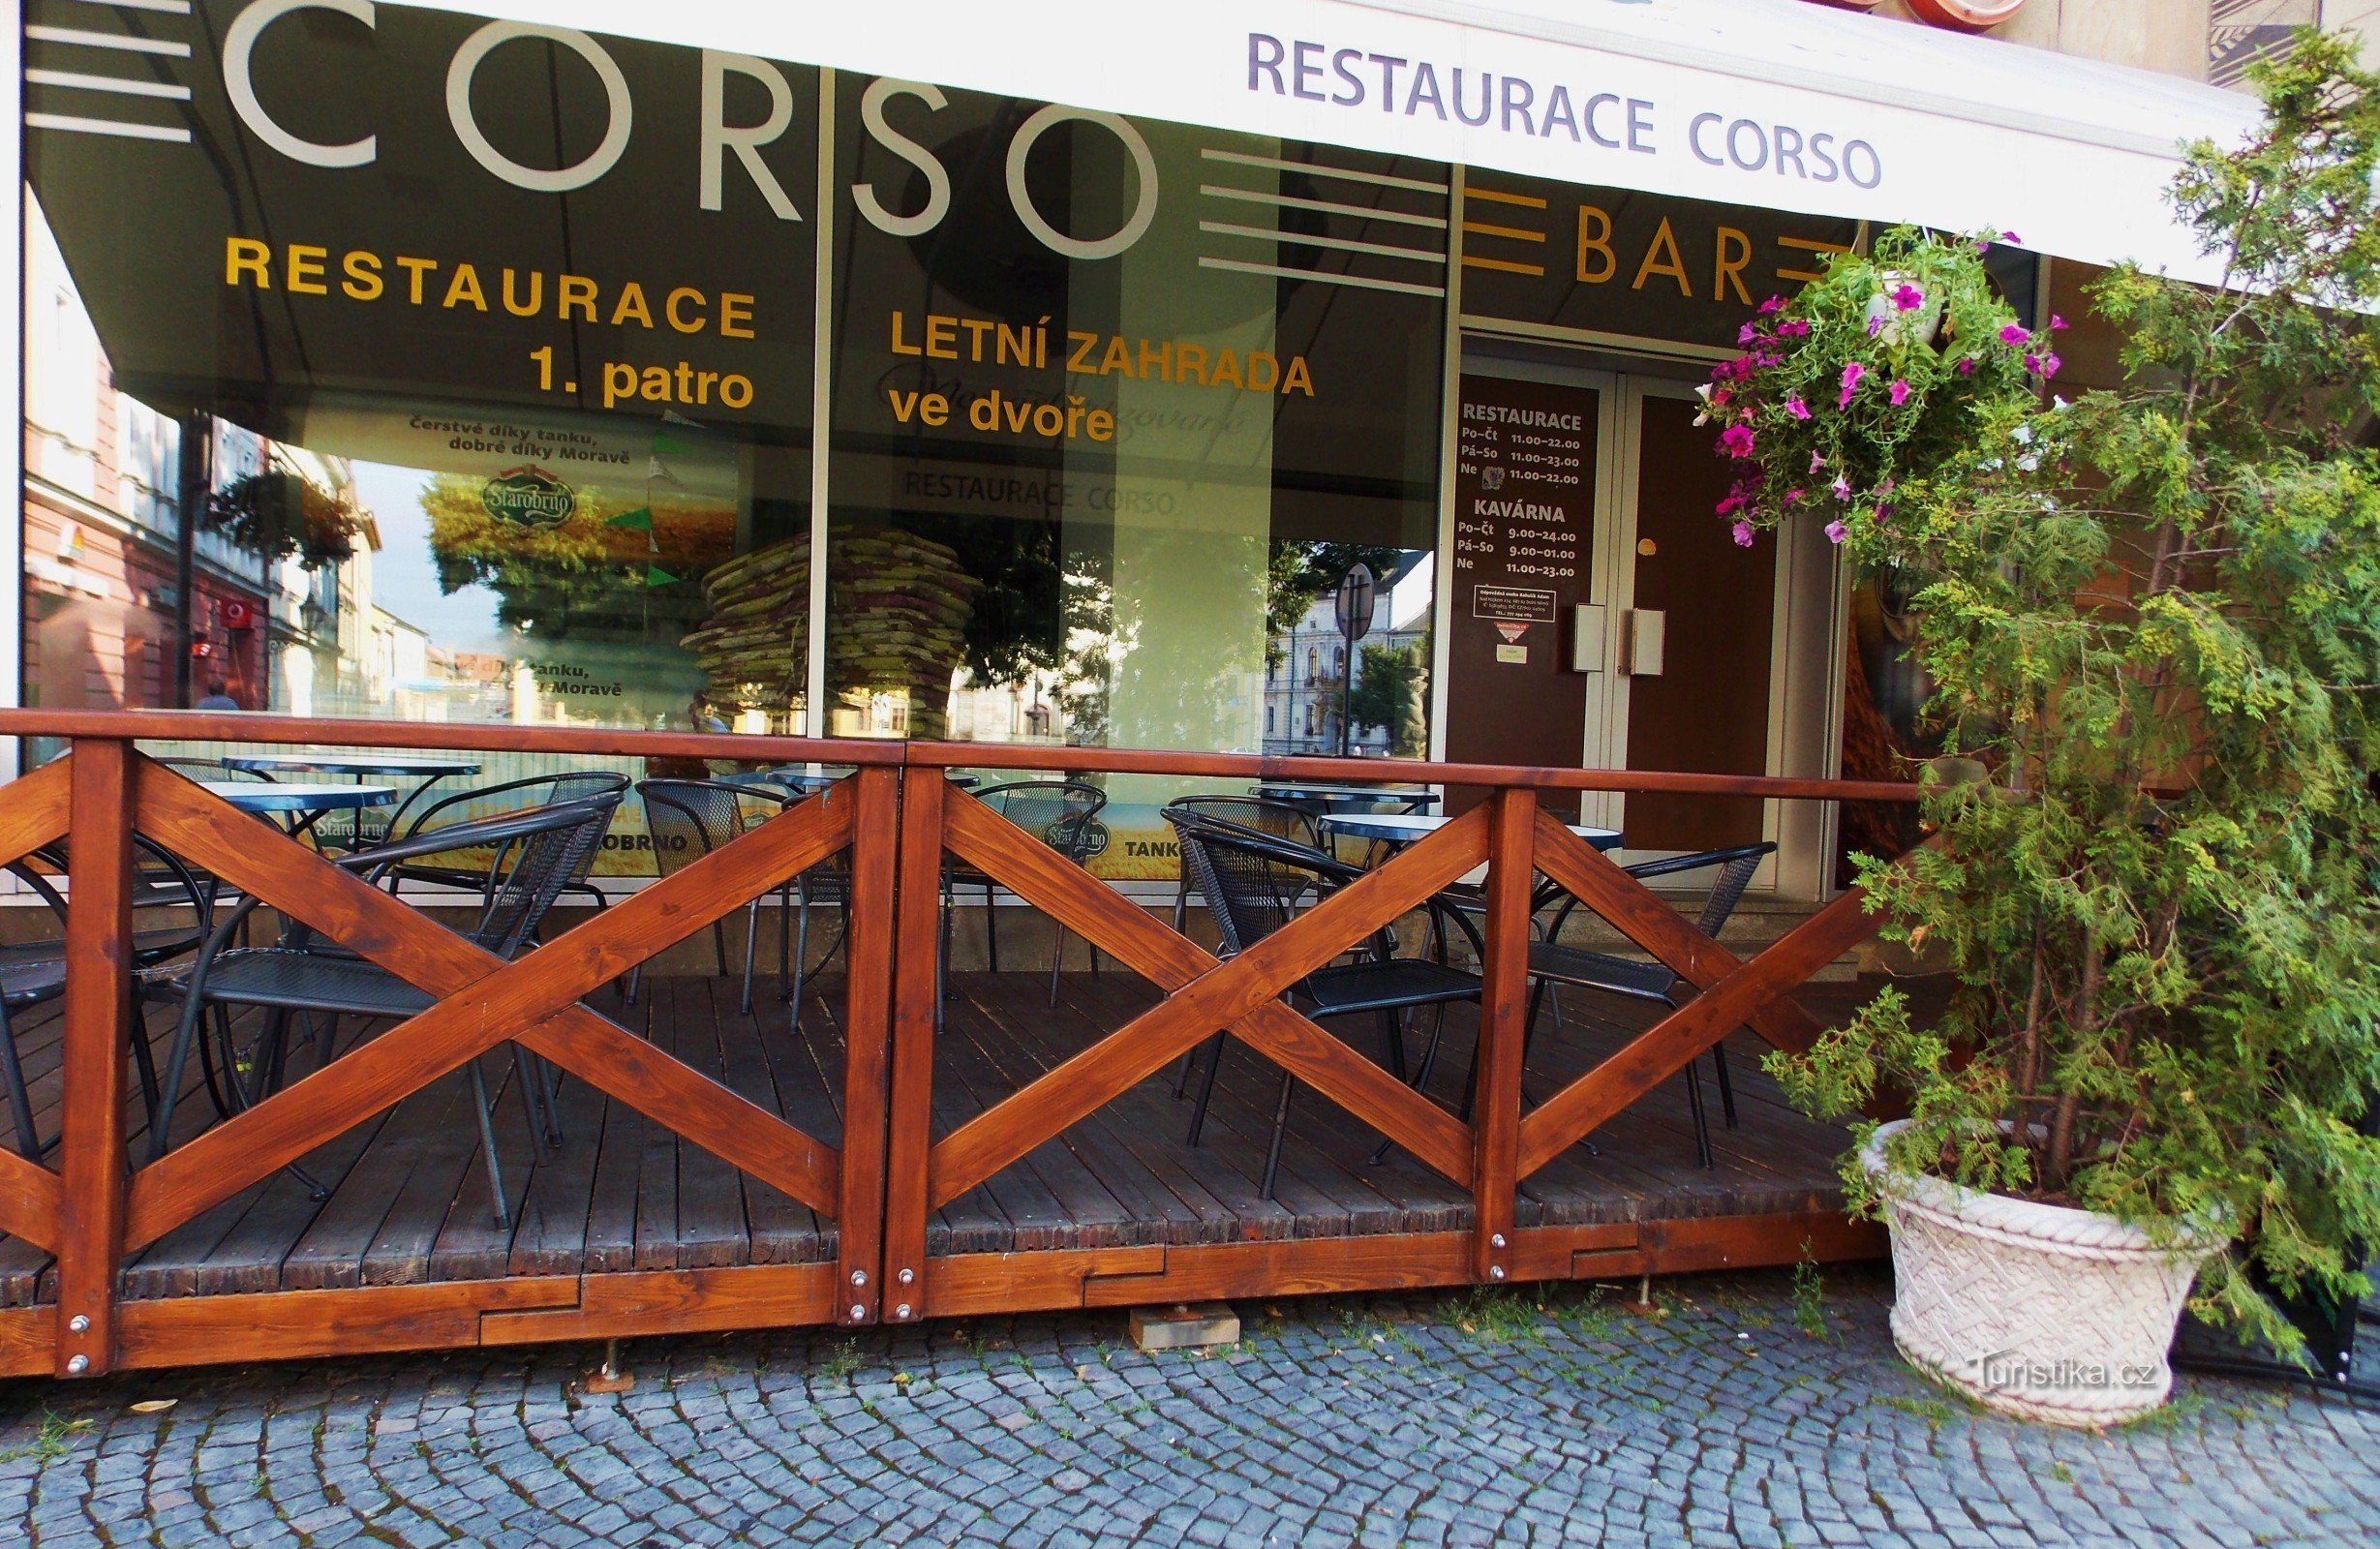 Corso étterem és kávézó Uherské Hradiště-ben